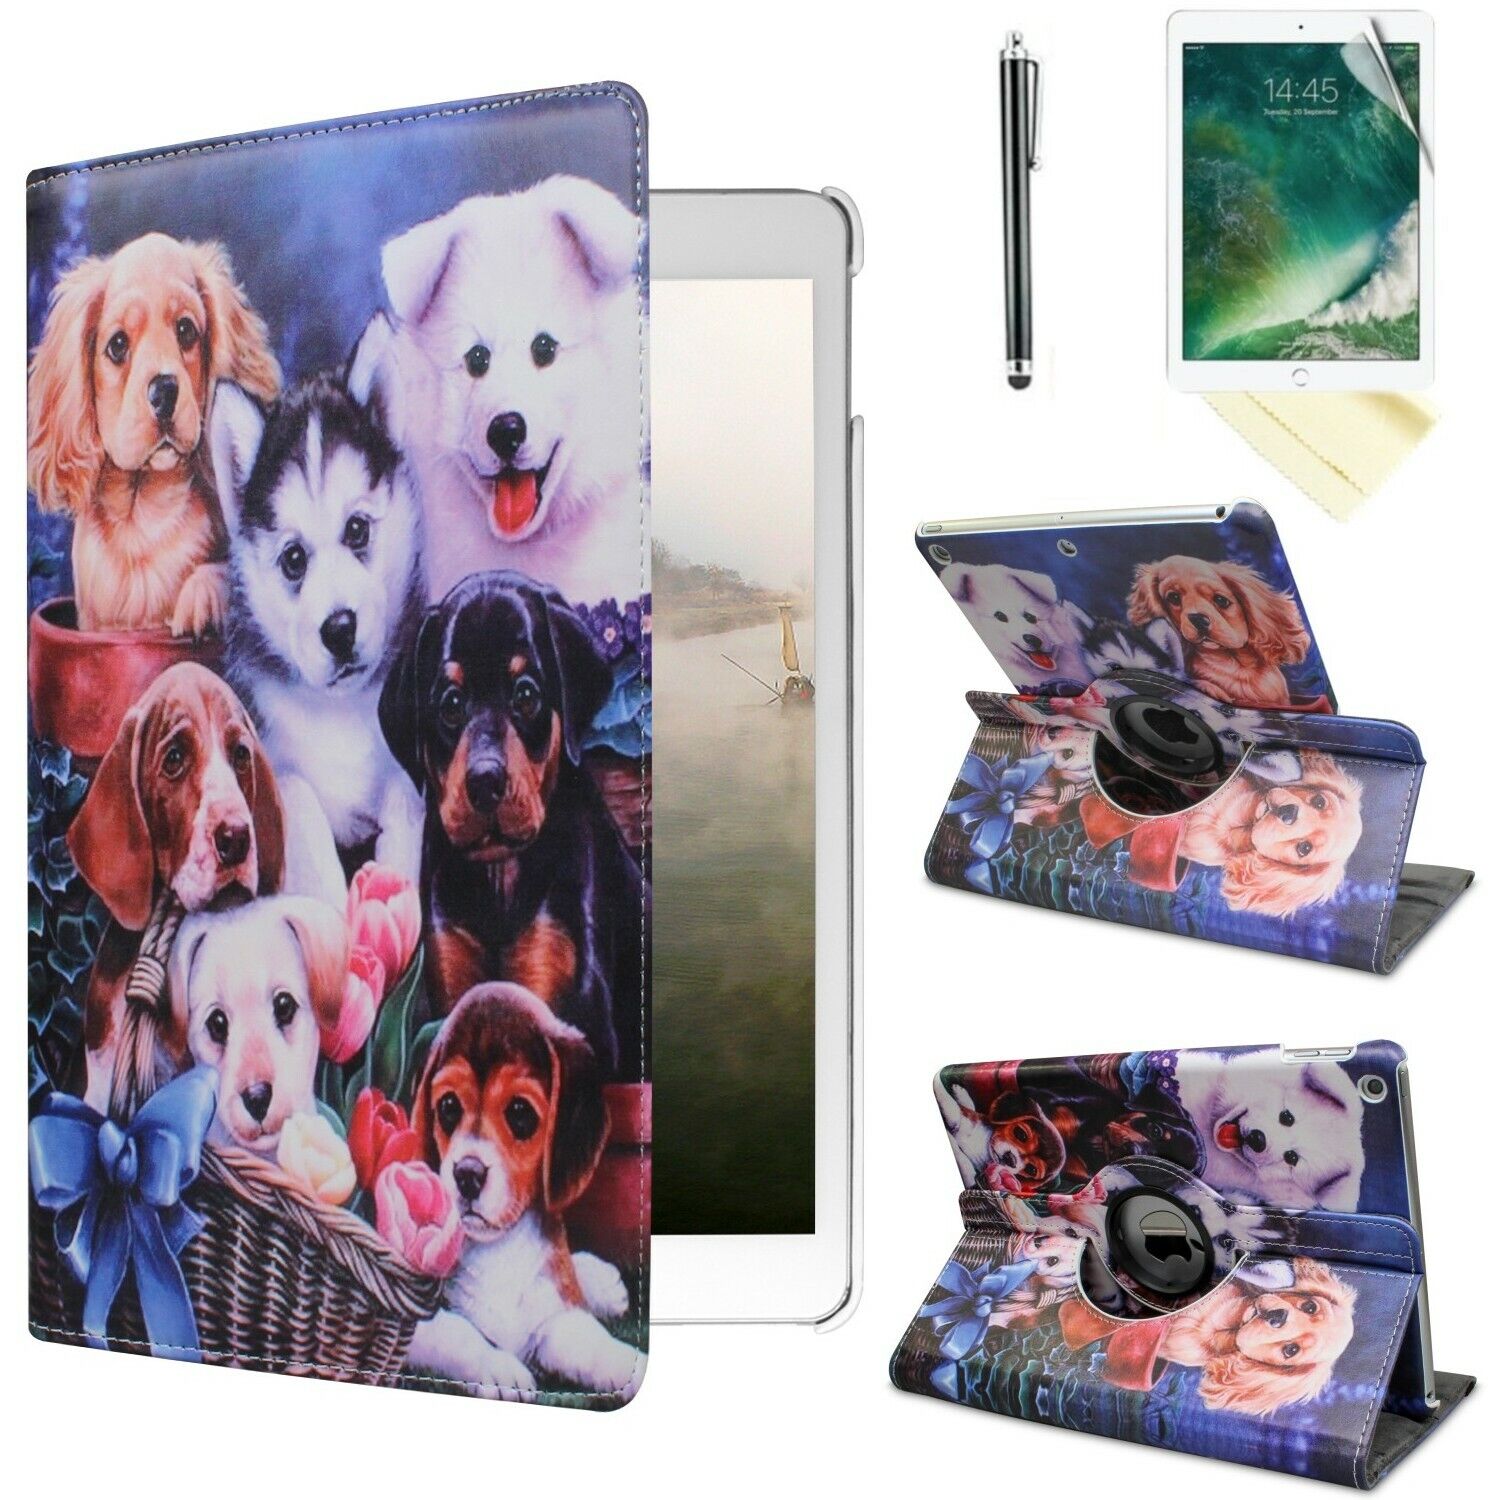 Dog / Cat  Designs  ipad case  For Apple  IPad 2 3 4 / Mini 1 2 3 / iPad Air1 